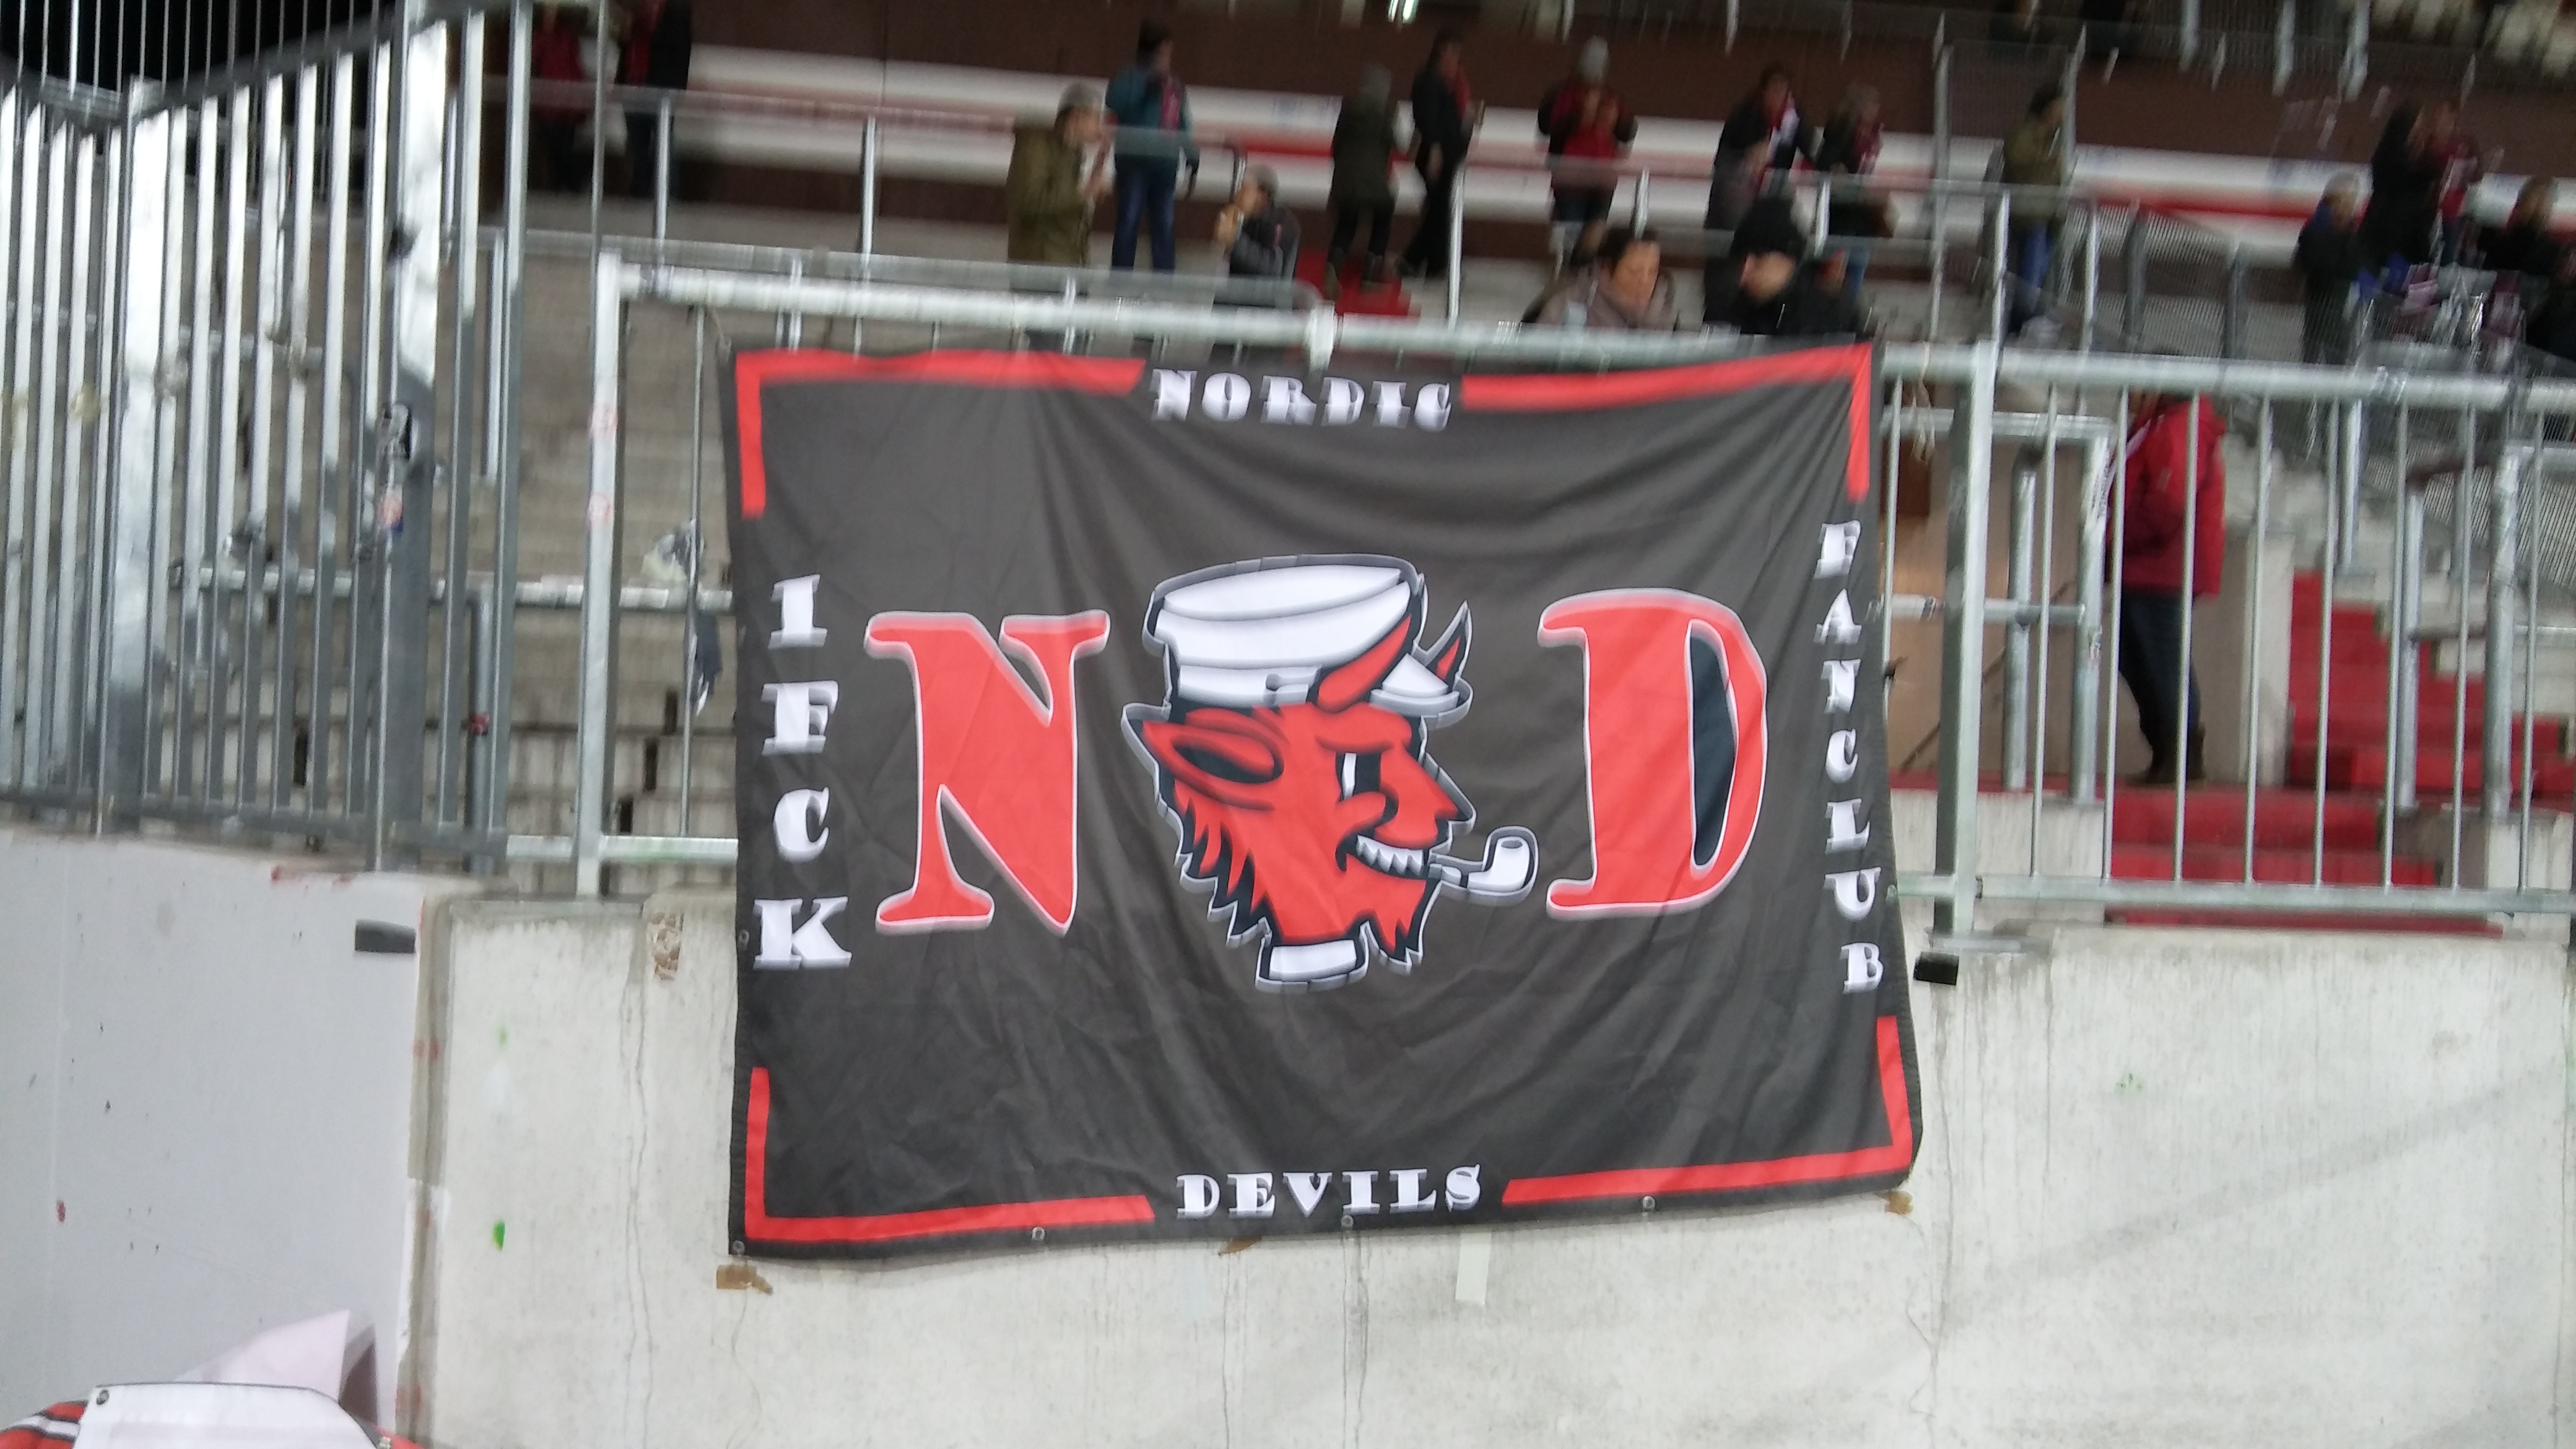 Nordic Devils Fanclub